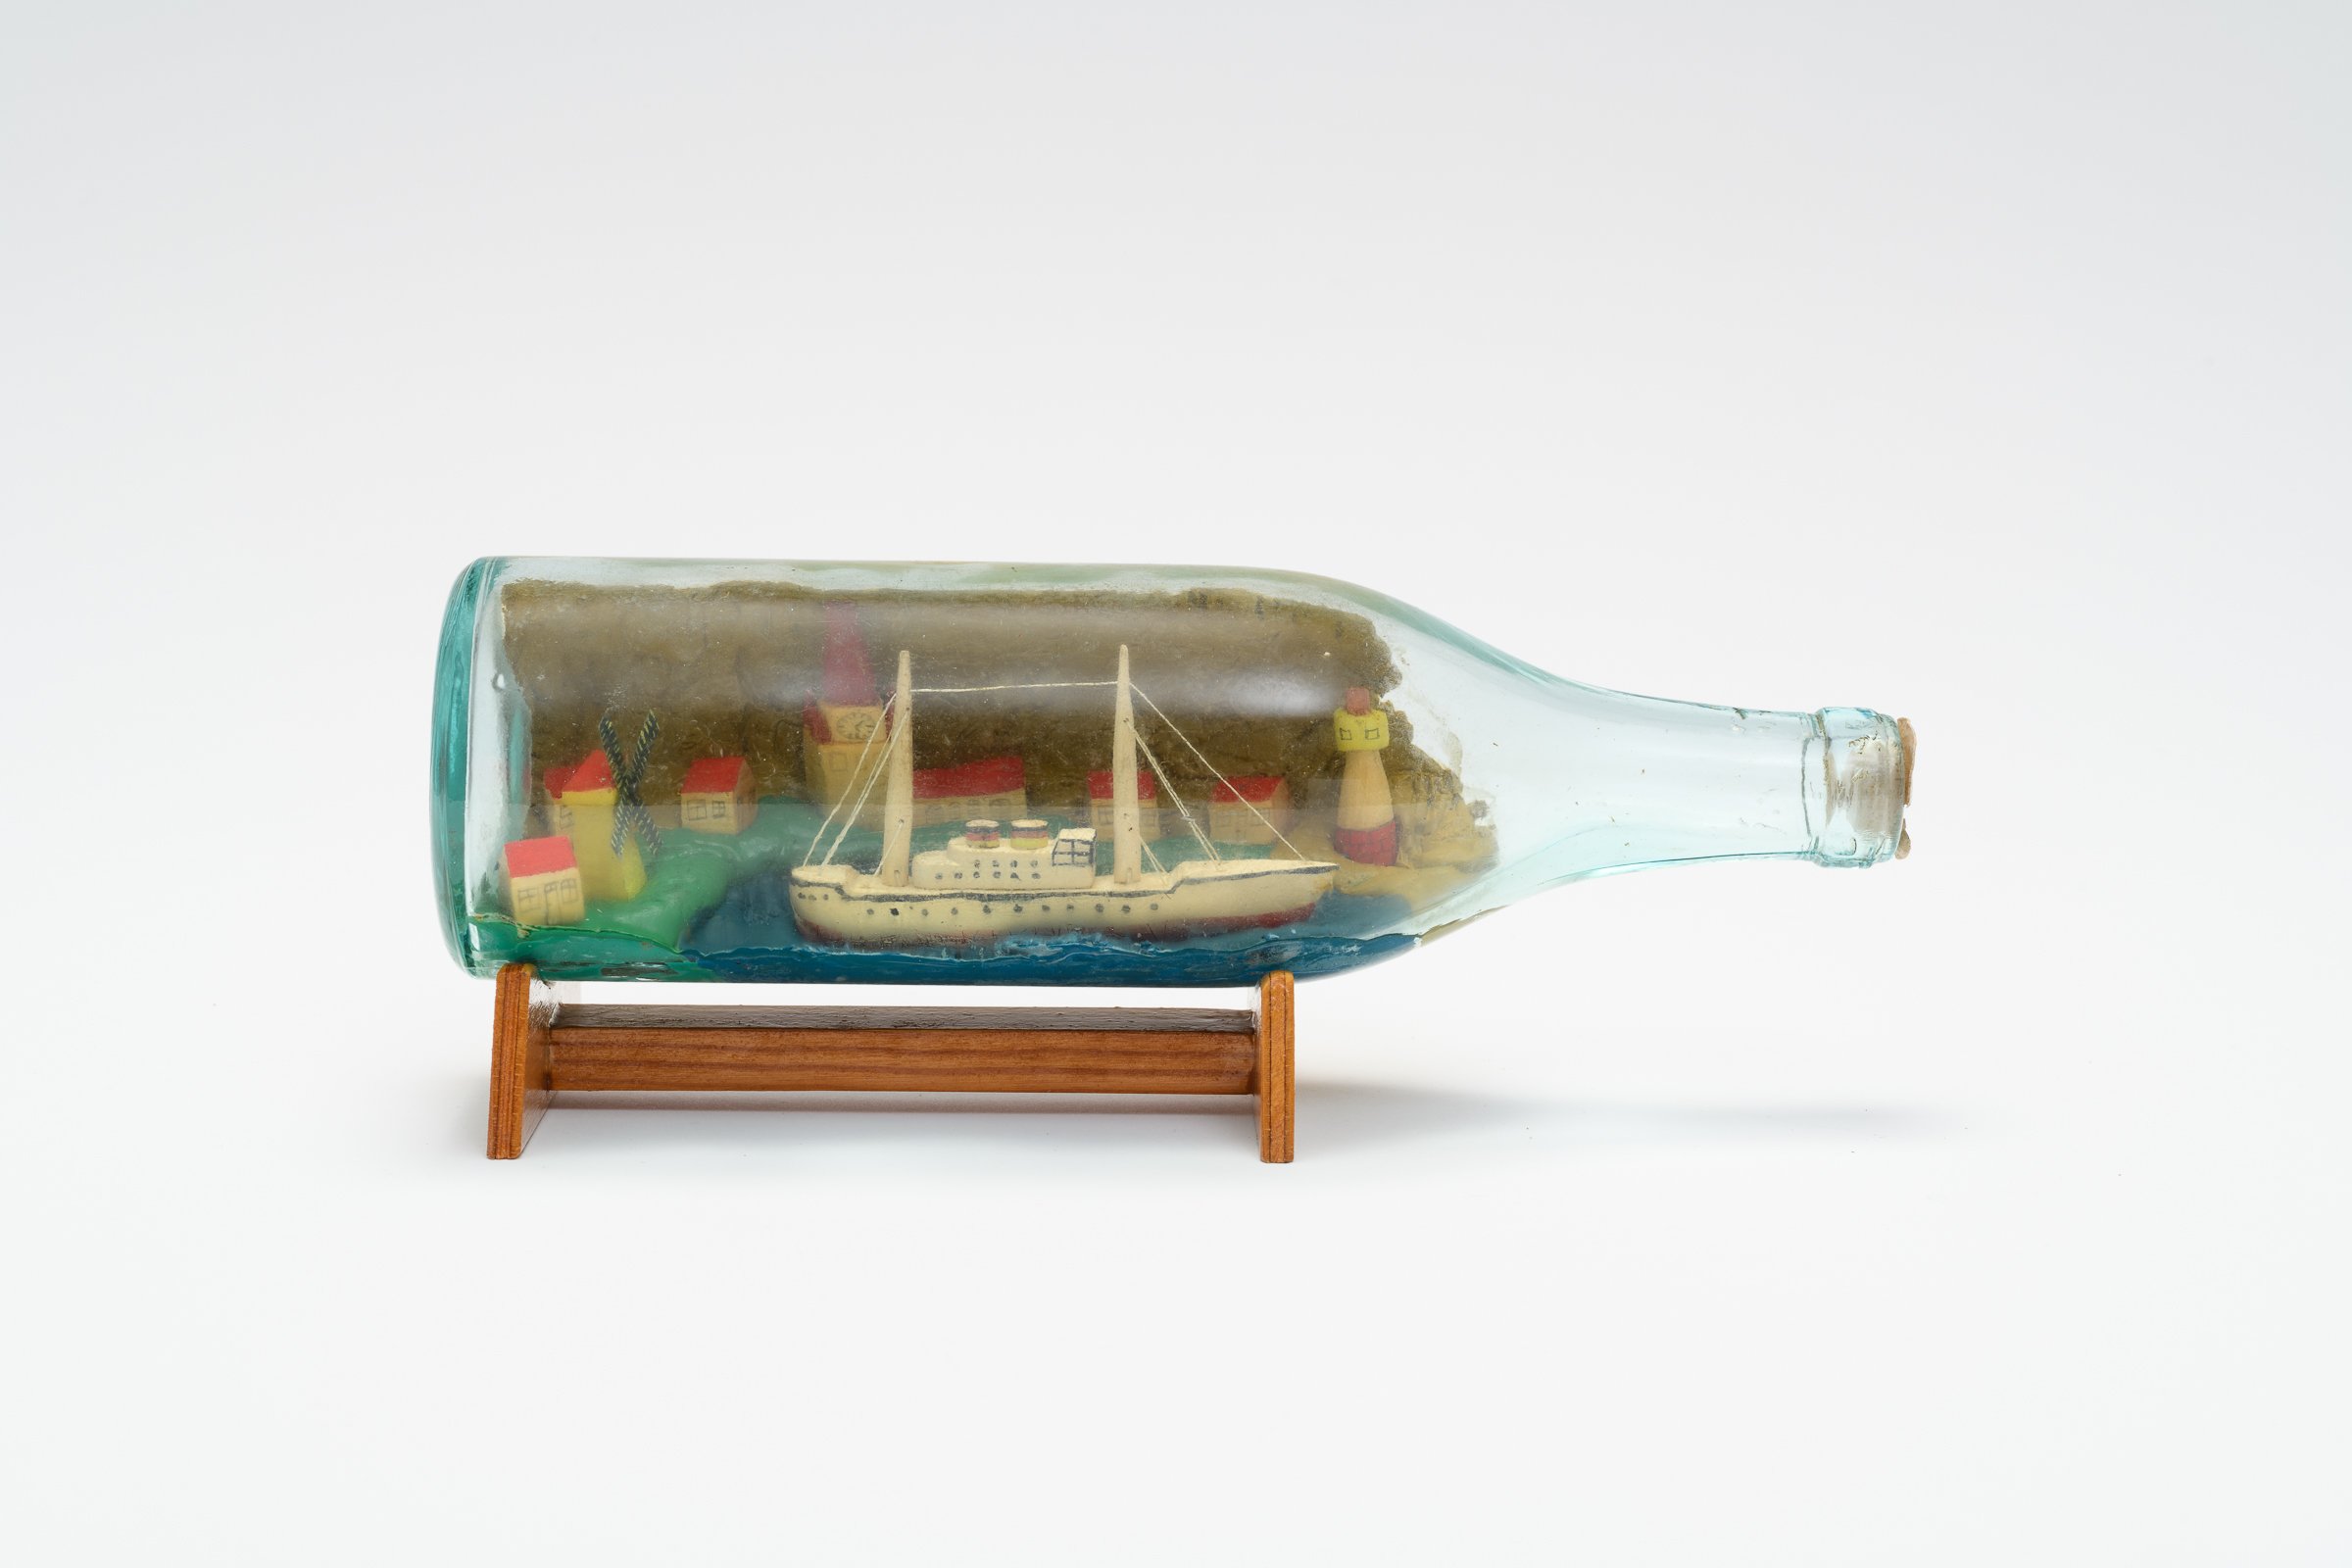 Flaschenschiff Ozeandampfer (Binnenschifffahrts-Museum Oderberg CC BY-NC-SA)